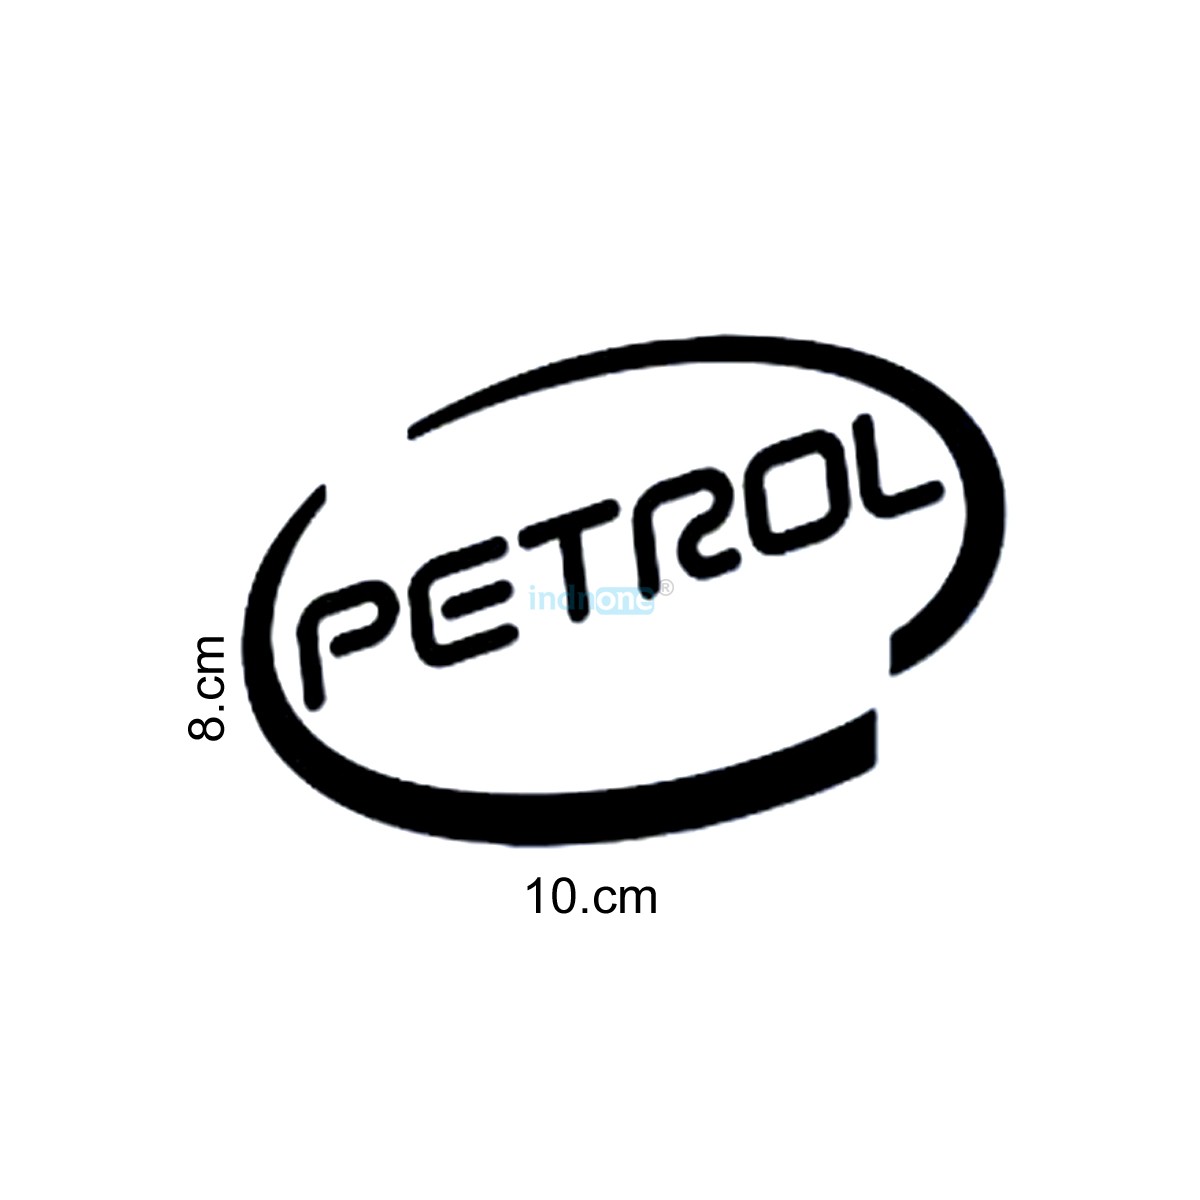 Intellprint India 10.16 cm Petrol logo Vinyl car Decal sticker Non-Reusable  Sticker Price in India - Buy Intellprint India 10.16 cm Petrol logo Vinyl  car Decal sticker Non-Reusable Sticker online at Flipkart.com